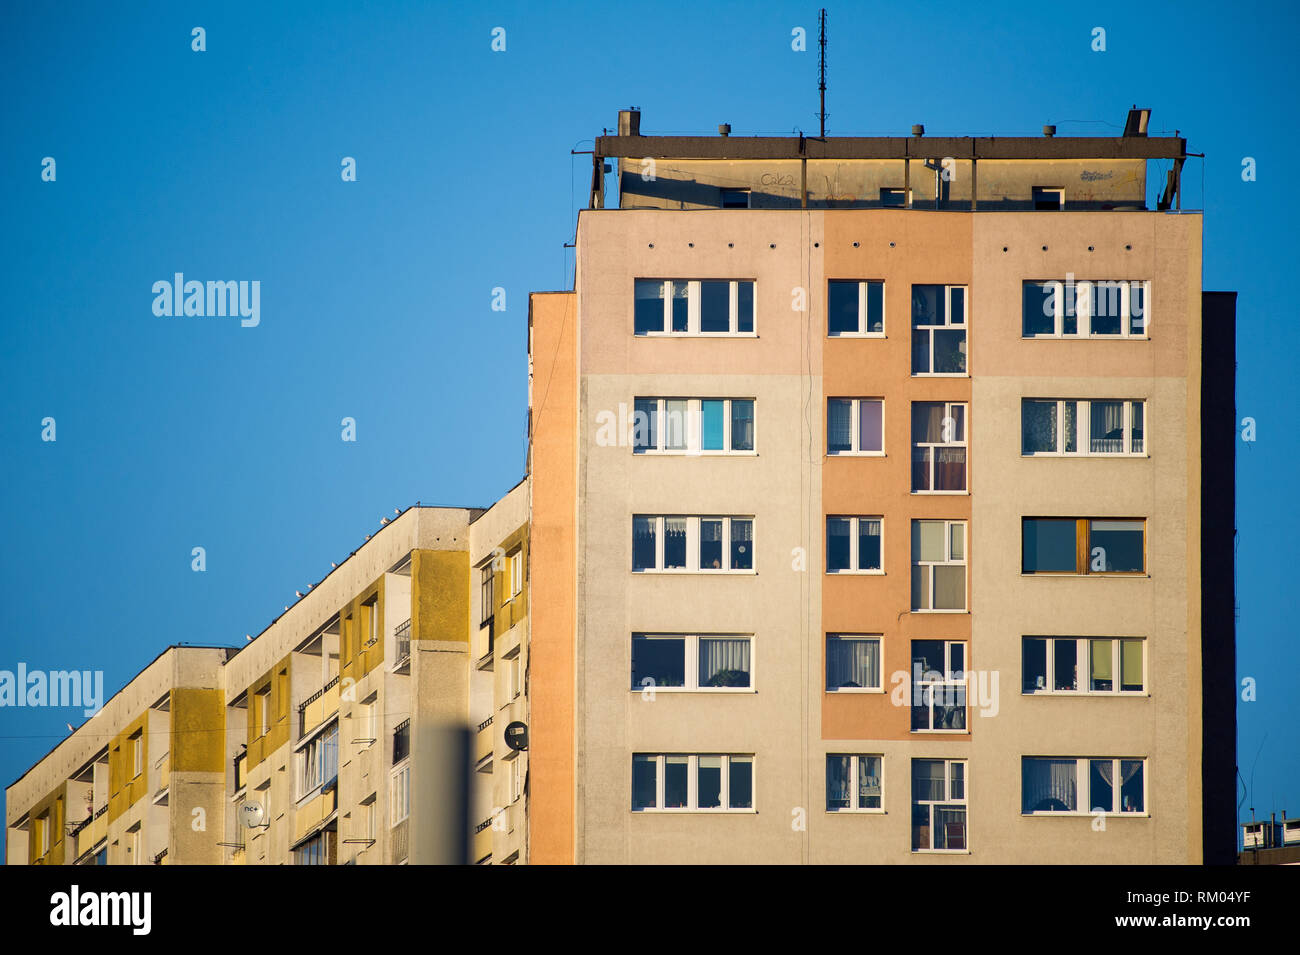 Communist era apartment buildings in Gdansk, Poland. February 30th 2019 © Wojciech Strozyk / Alamy Stock Photo Stock Photo